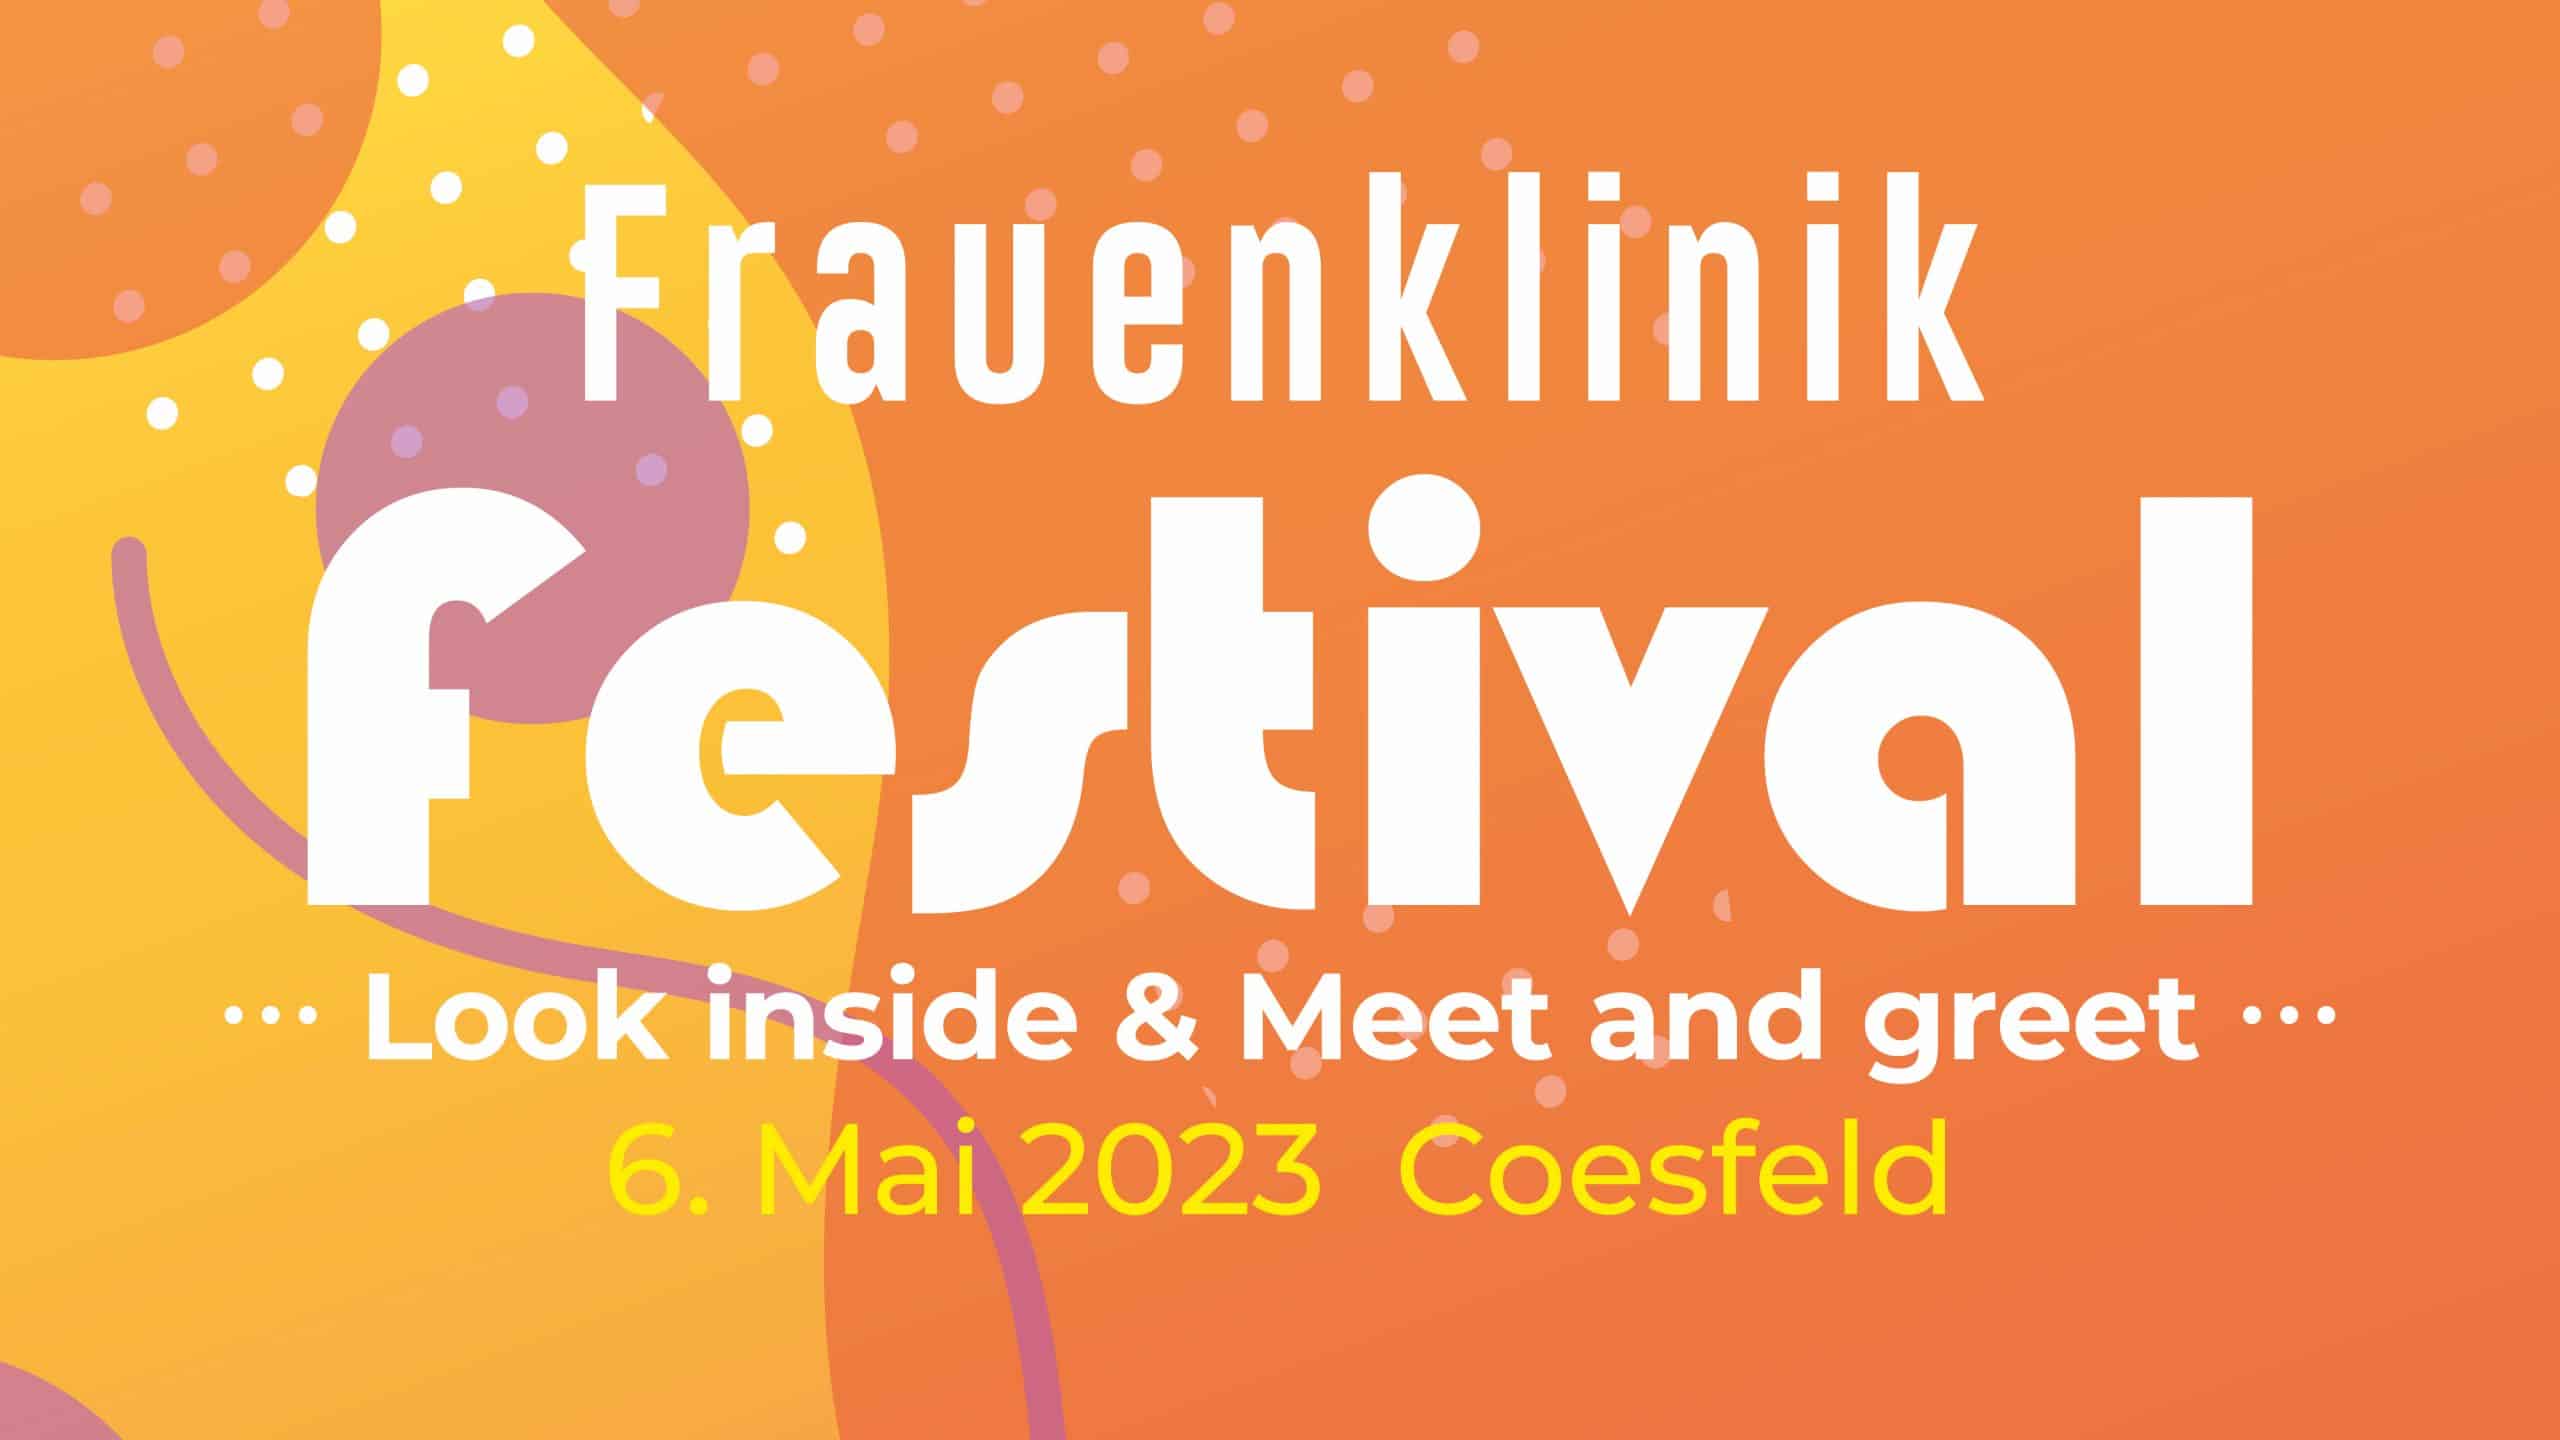 Frauenklinik Festival - Look inside